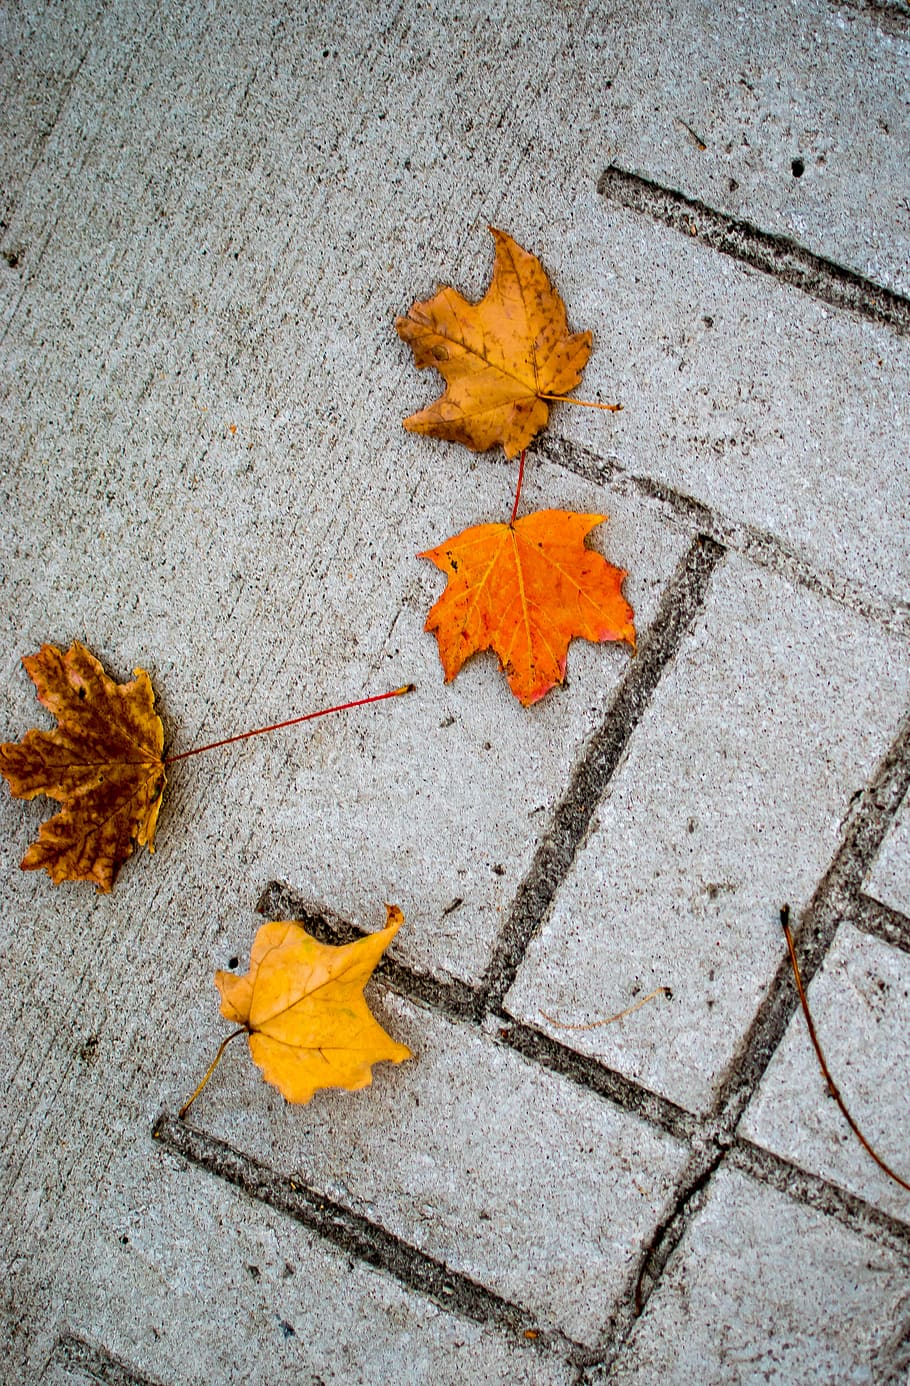 44+] Free Autumn Leaves Wallpapers - WallpaperSafari